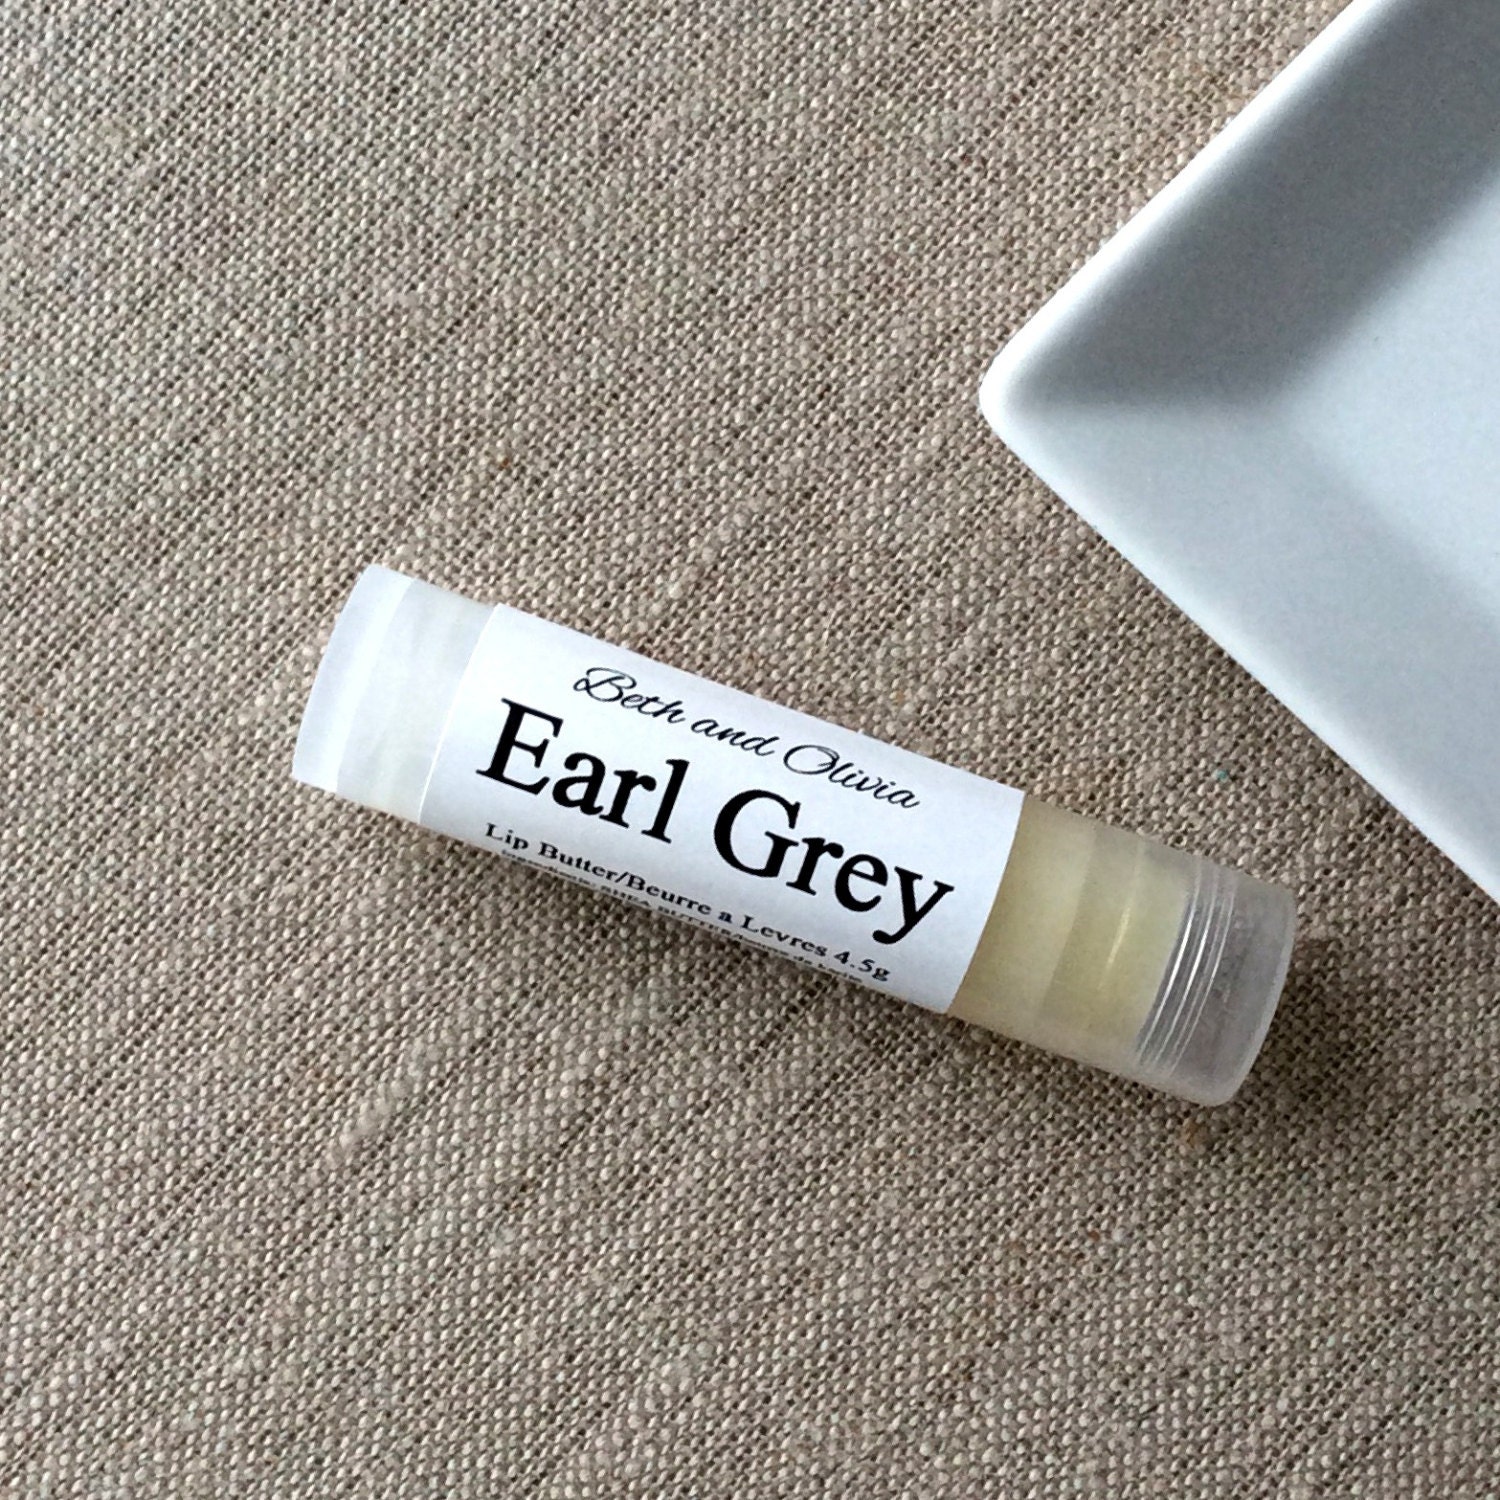 Earl Grey lip butter, Earl Grey lip balm, bergamot lip balm, lip balms, lip balm favors, earl grey chapstick, Wholesale lip balm